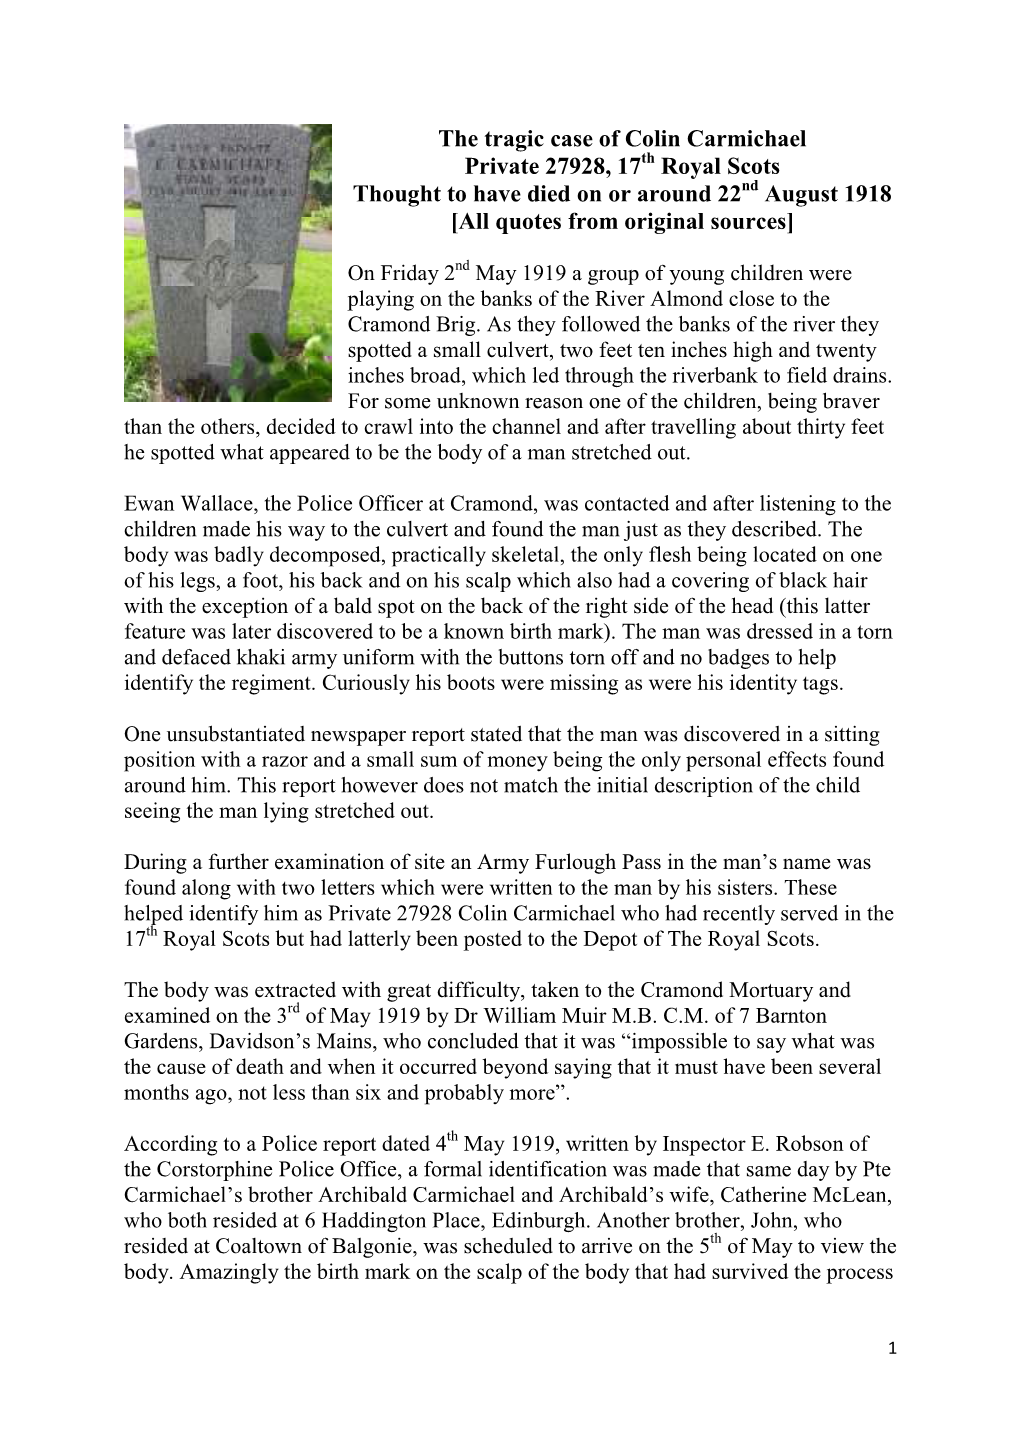 The Tragic Case of Colin Carmichael Private 27928, 17 Royal Scots